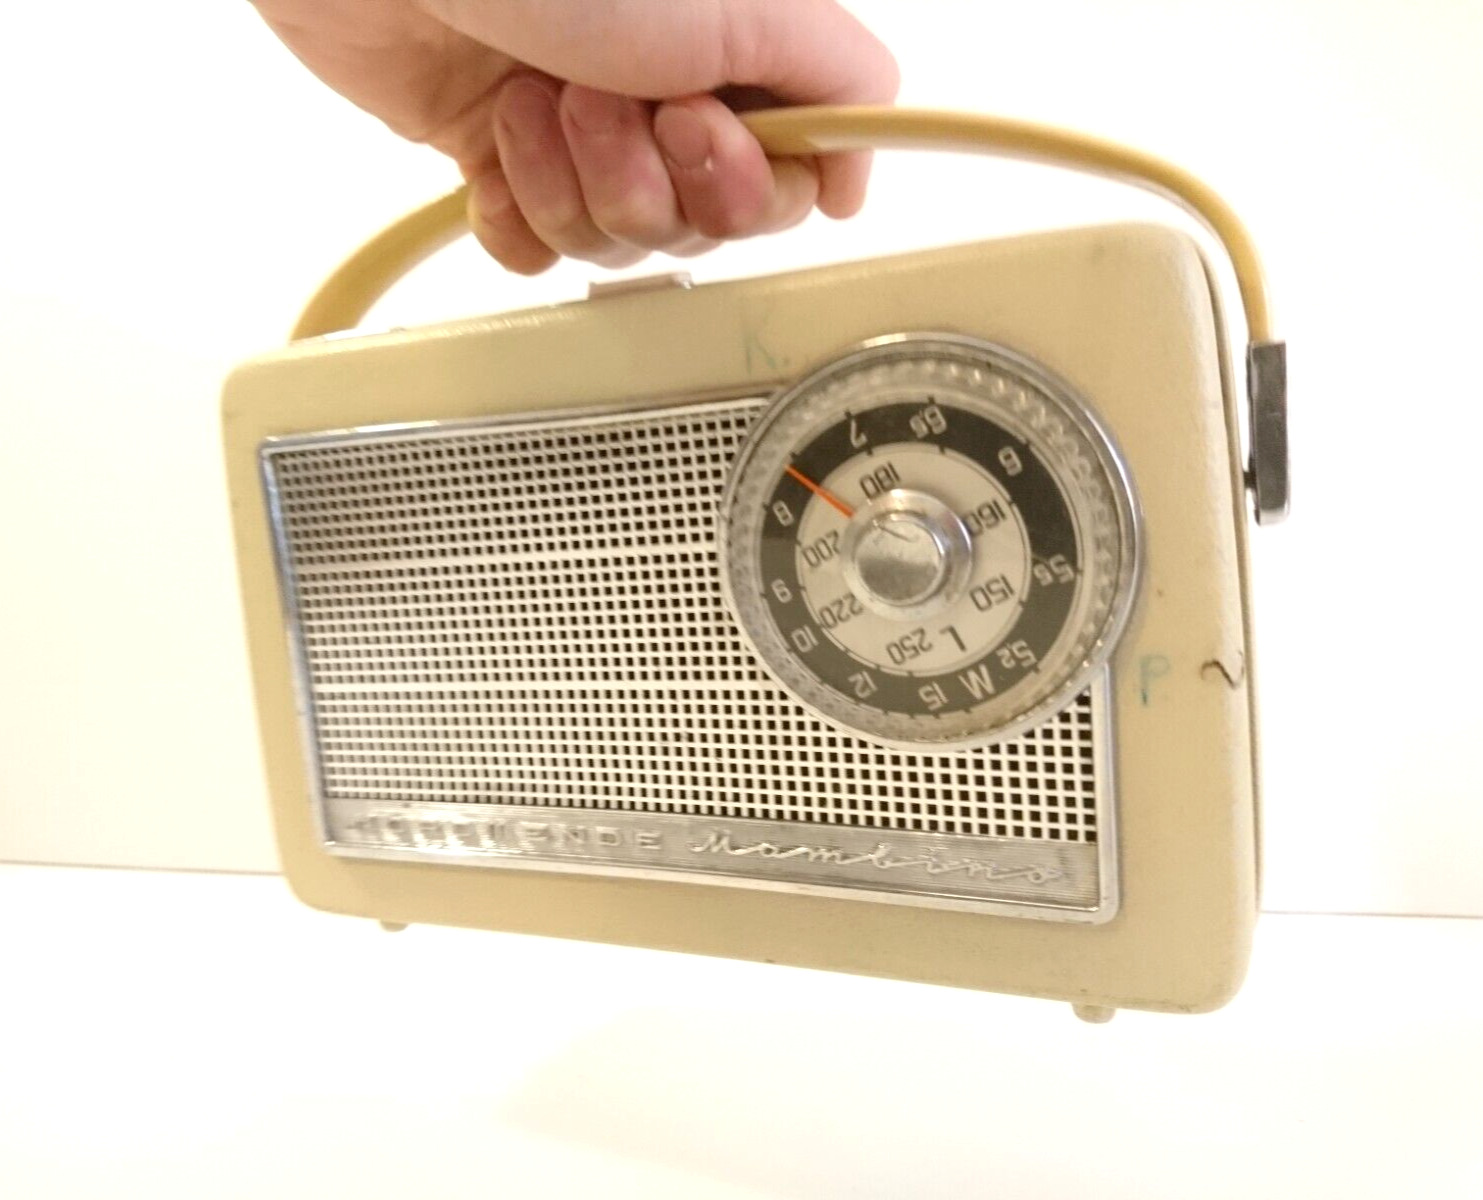 NordMende Mambino Vintage Transistor Radio 1960s Germany - Untested